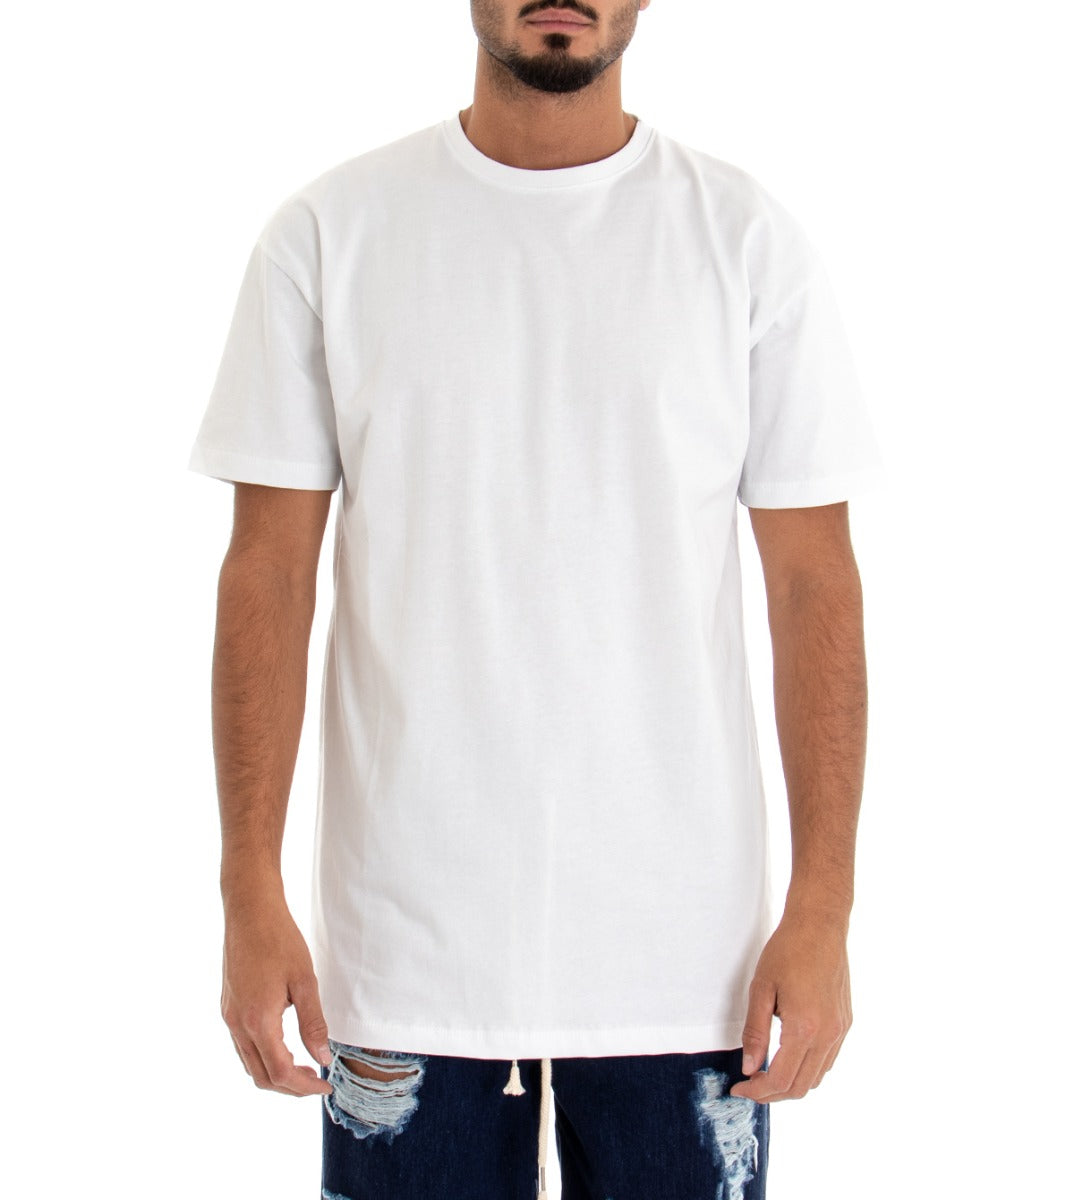 Men's T-shirt Short Sleeved Solid Color White Print Back Crew Neck GIOSAL